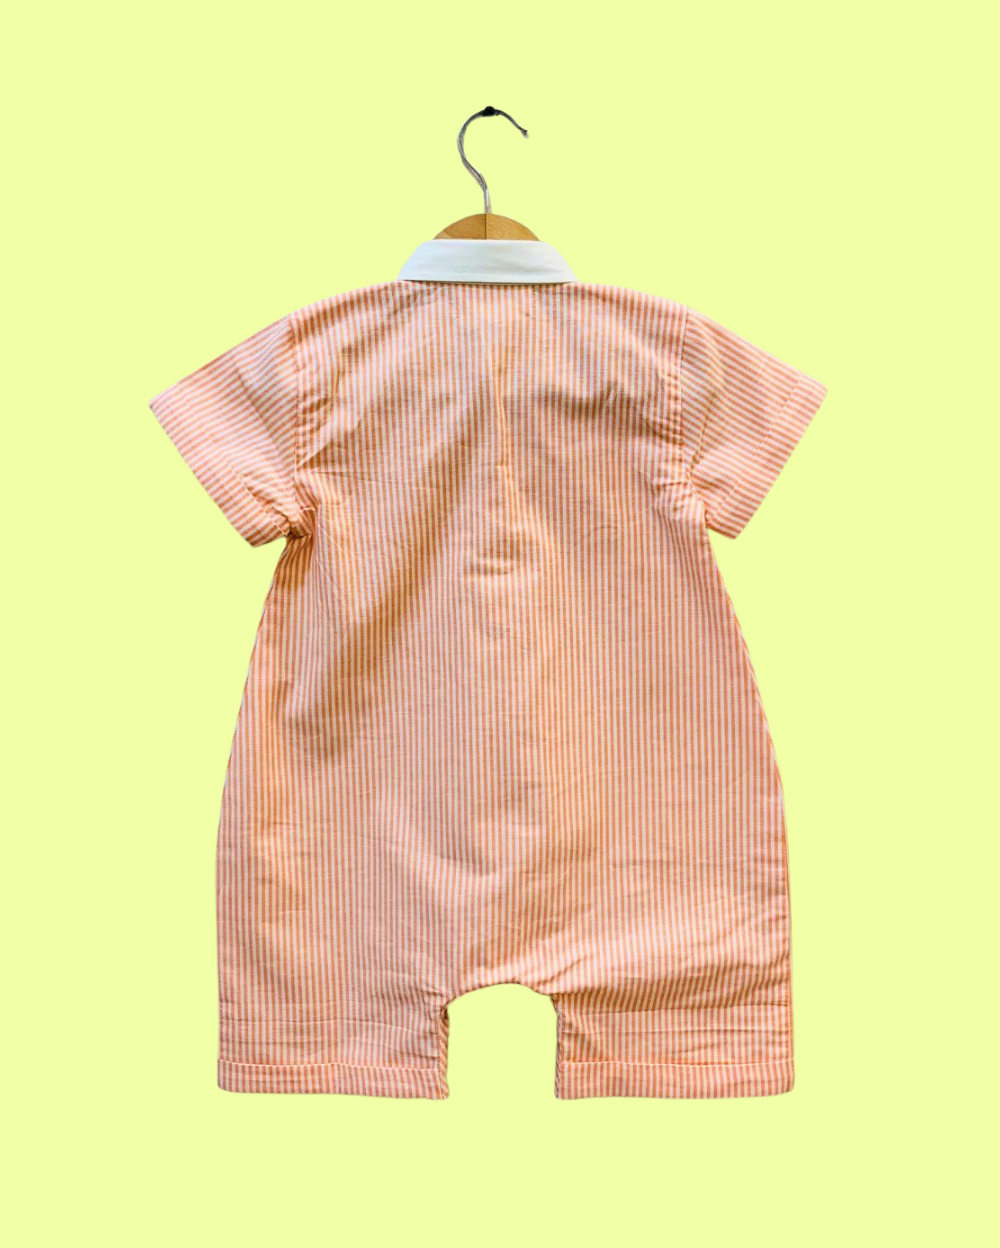 100% Cotton Orange Romper, Yellow Baby Set & Green Onesie for Baby Boys - 3 Piece Set